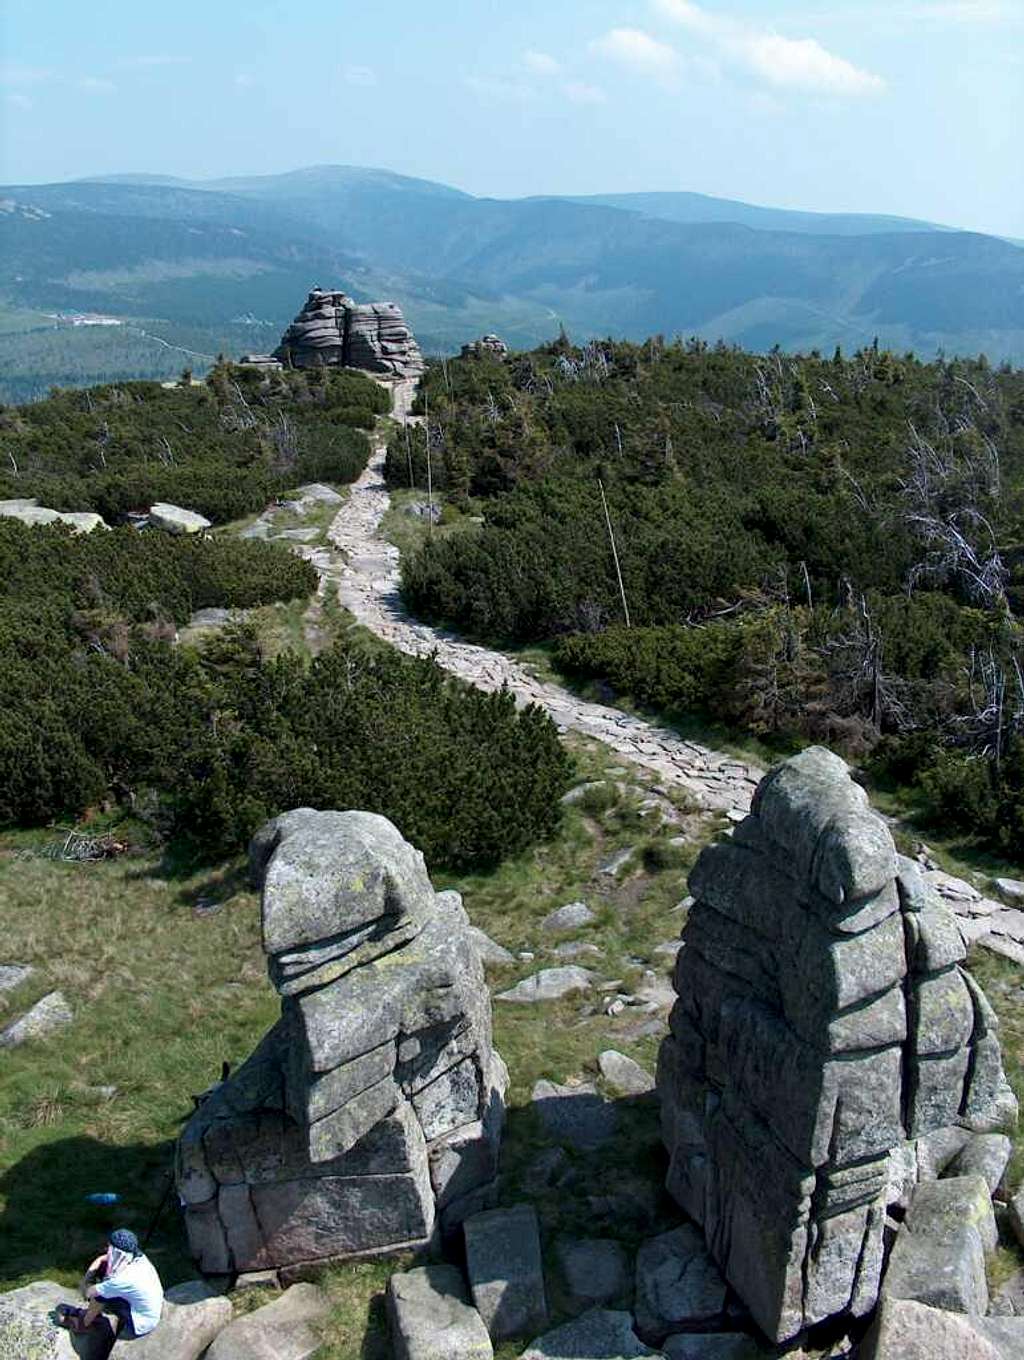 On top of Śląskie Kamienie/Dívči Kameny, rocky outcrops on the Karkonosze ridge